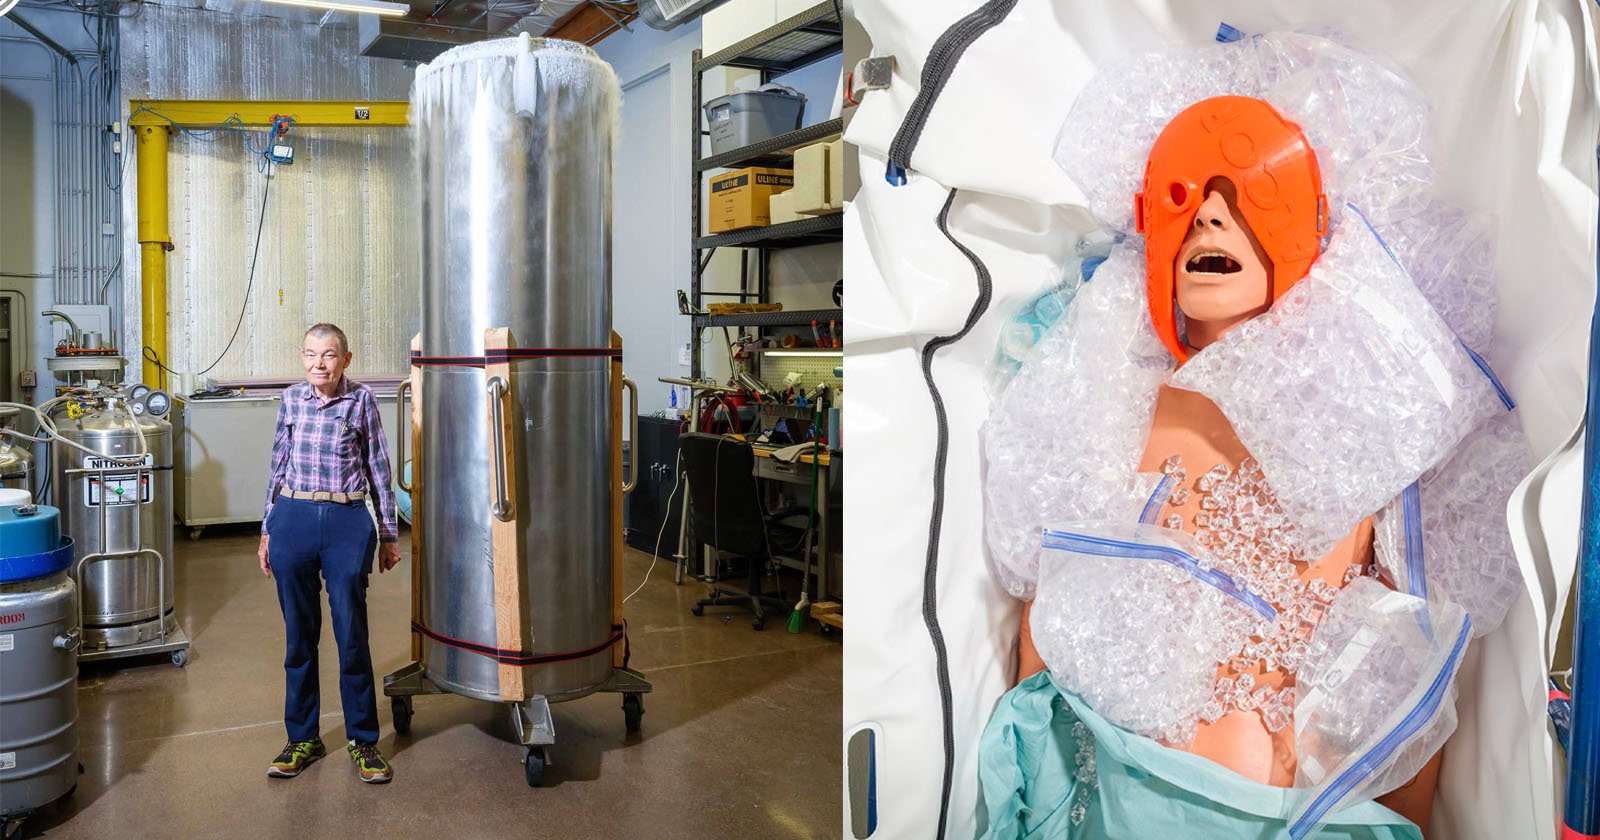  photographer visits creepy cryogenic chamber where 200 bodies 